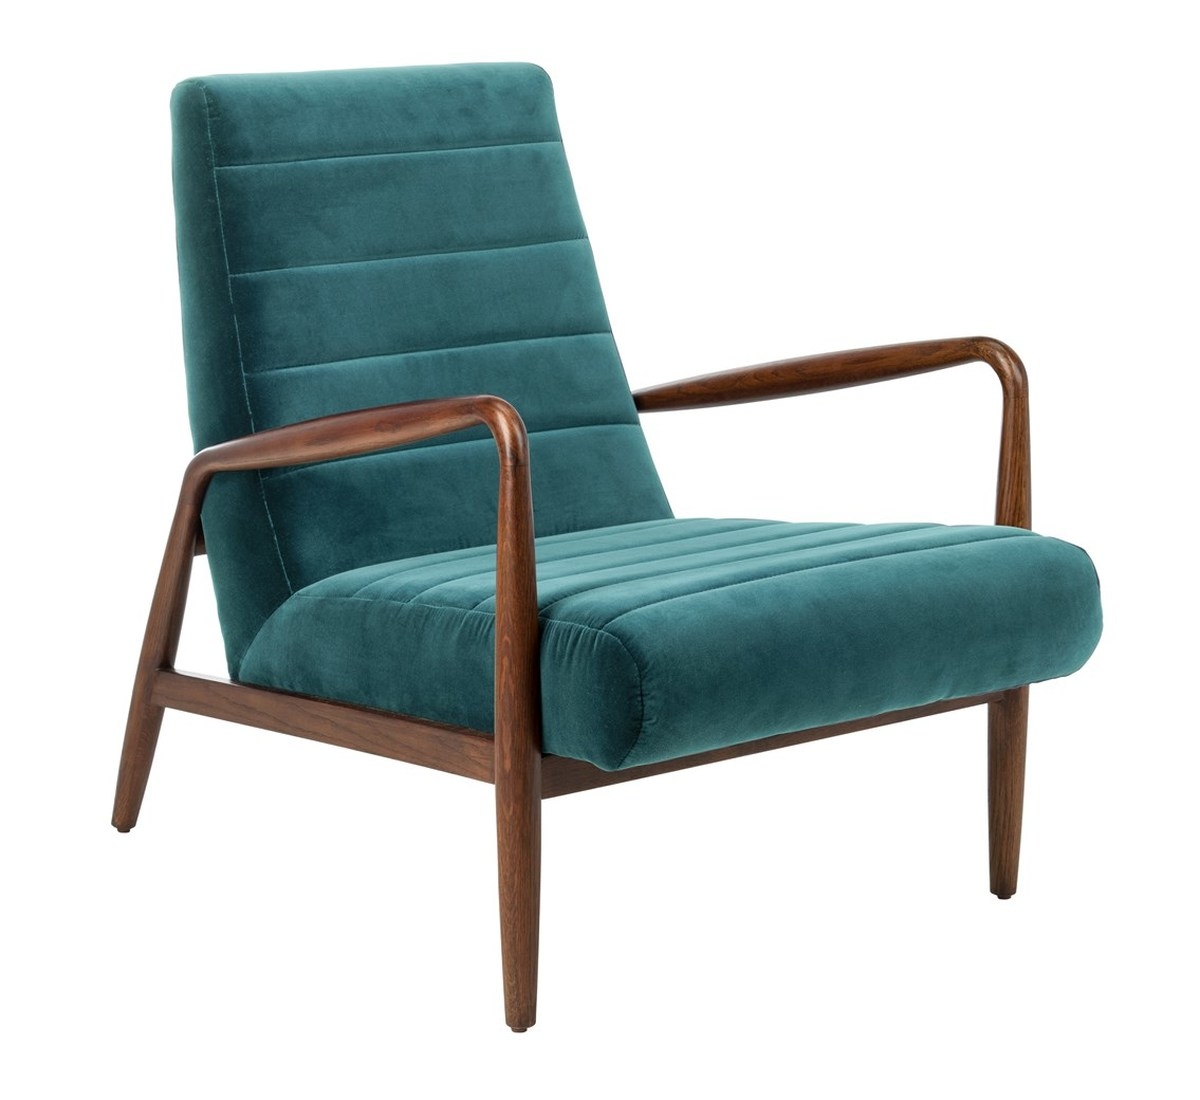 Willow Channel Tufted Arm Chair - Dark Teal/Dark Walnut - Arlo Home - Image 0